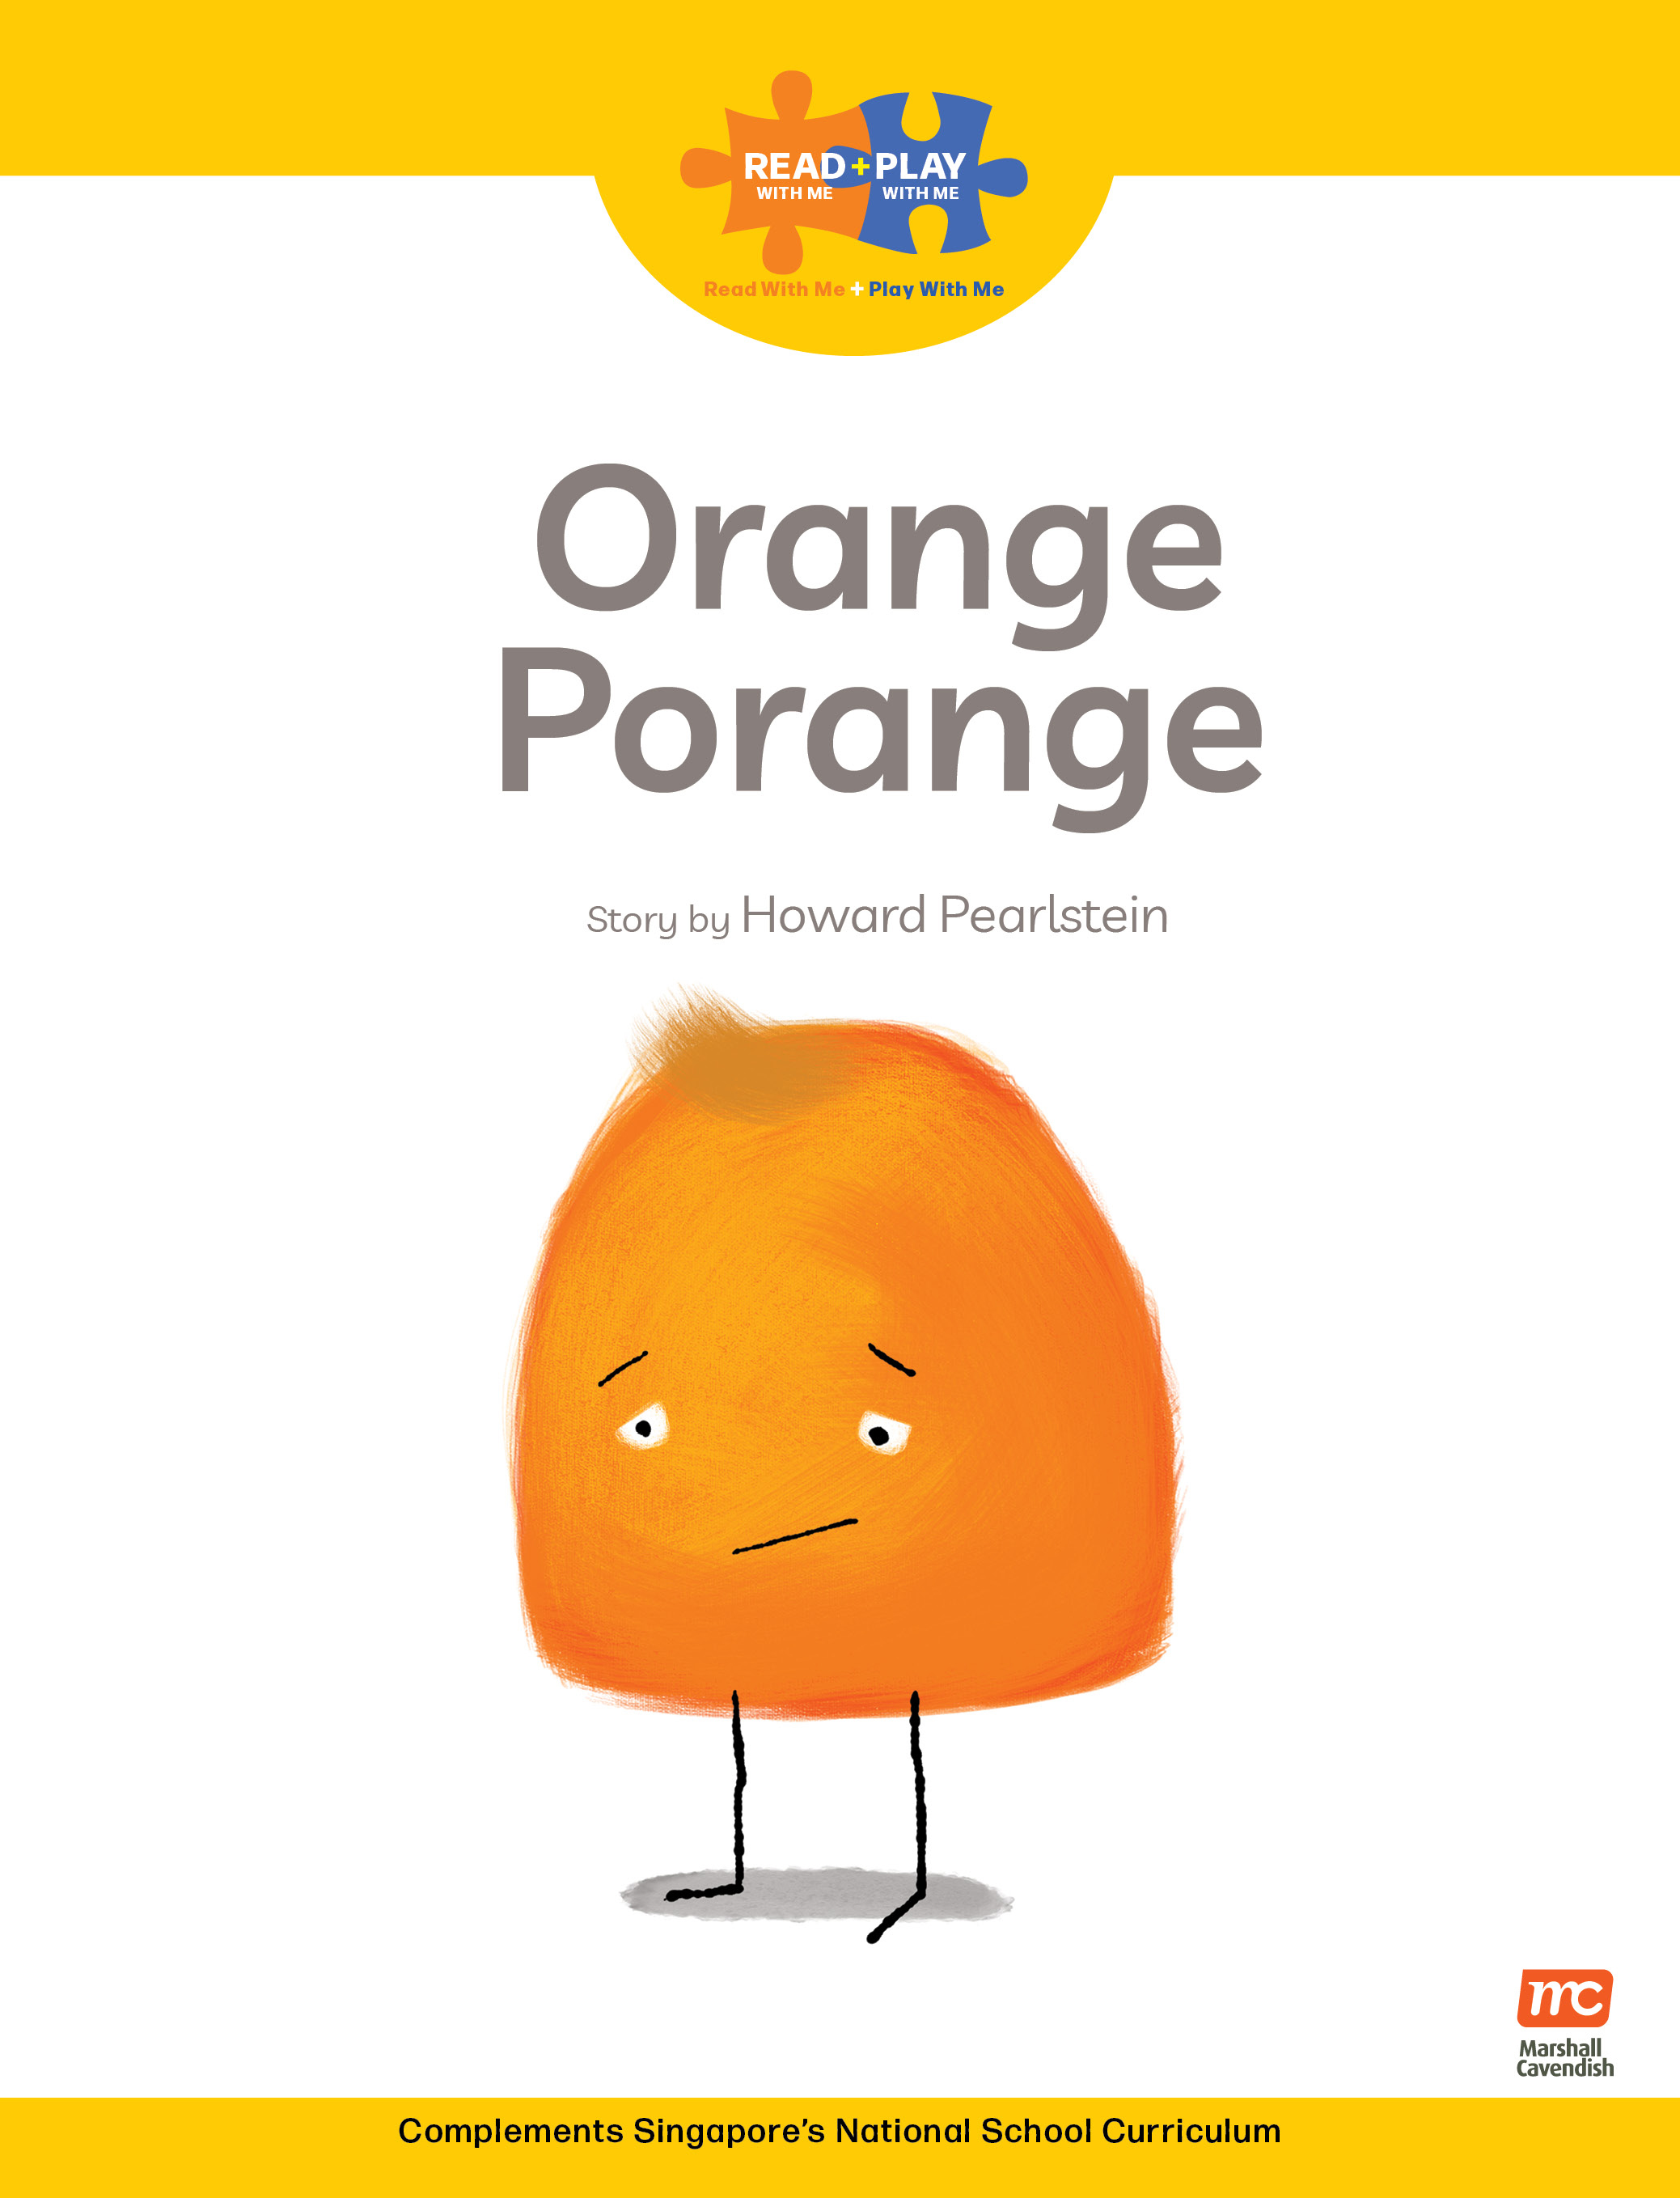 Growth Orange Porange Cover (RP).jpg